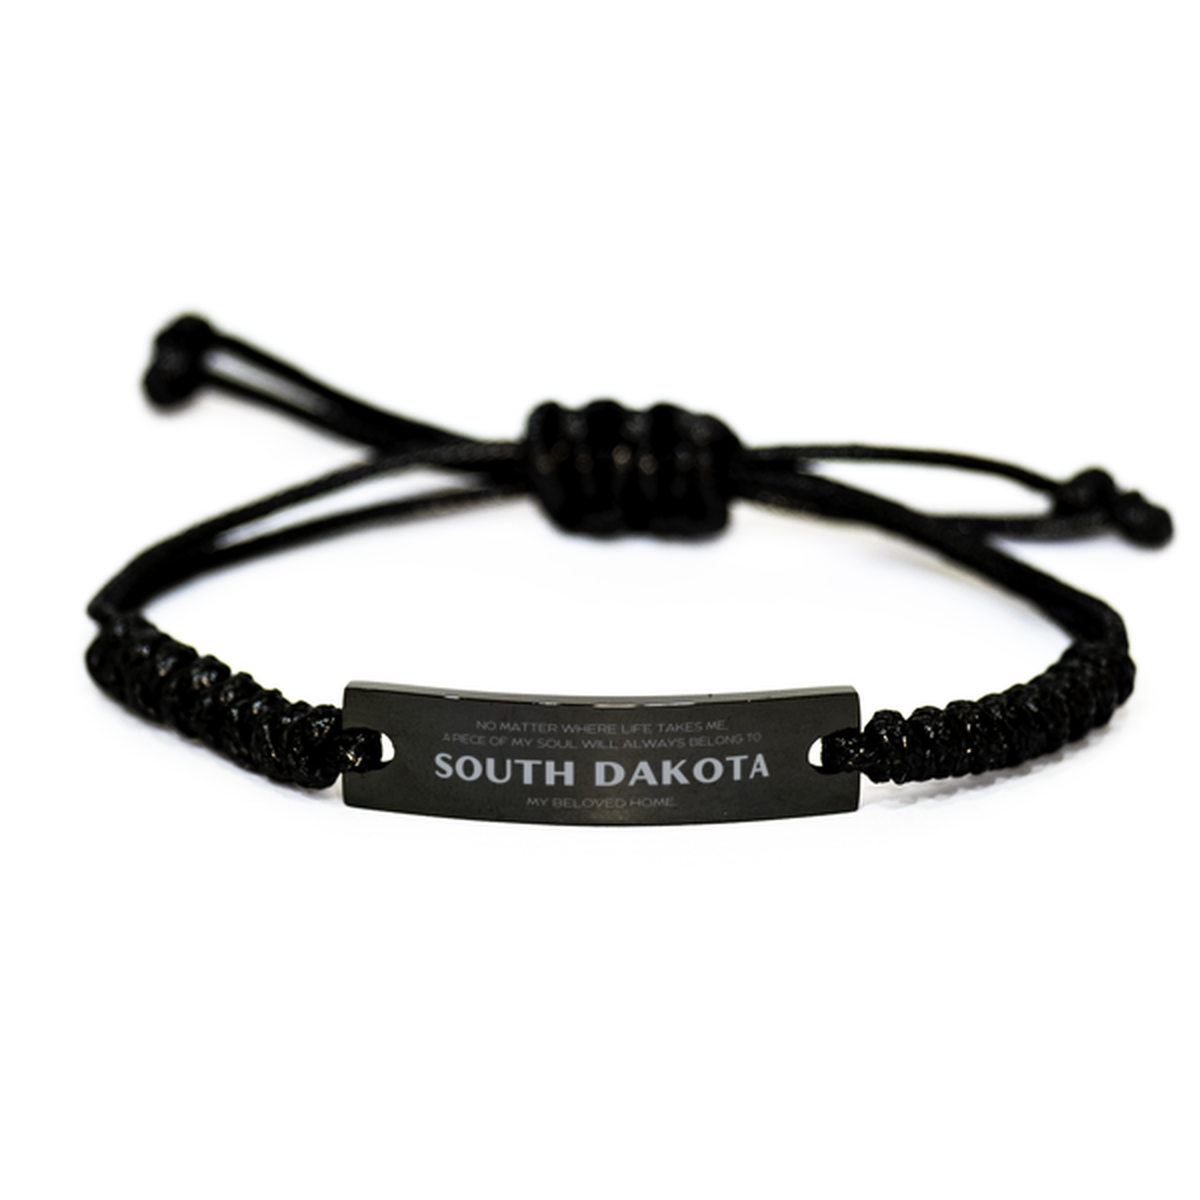 Love South Dakota State Gifts, My soul will always belong to South Dakota, Proud Black Rope Bracelet, Birthday Unique Gifts For South Dakota Men, Women, Friends